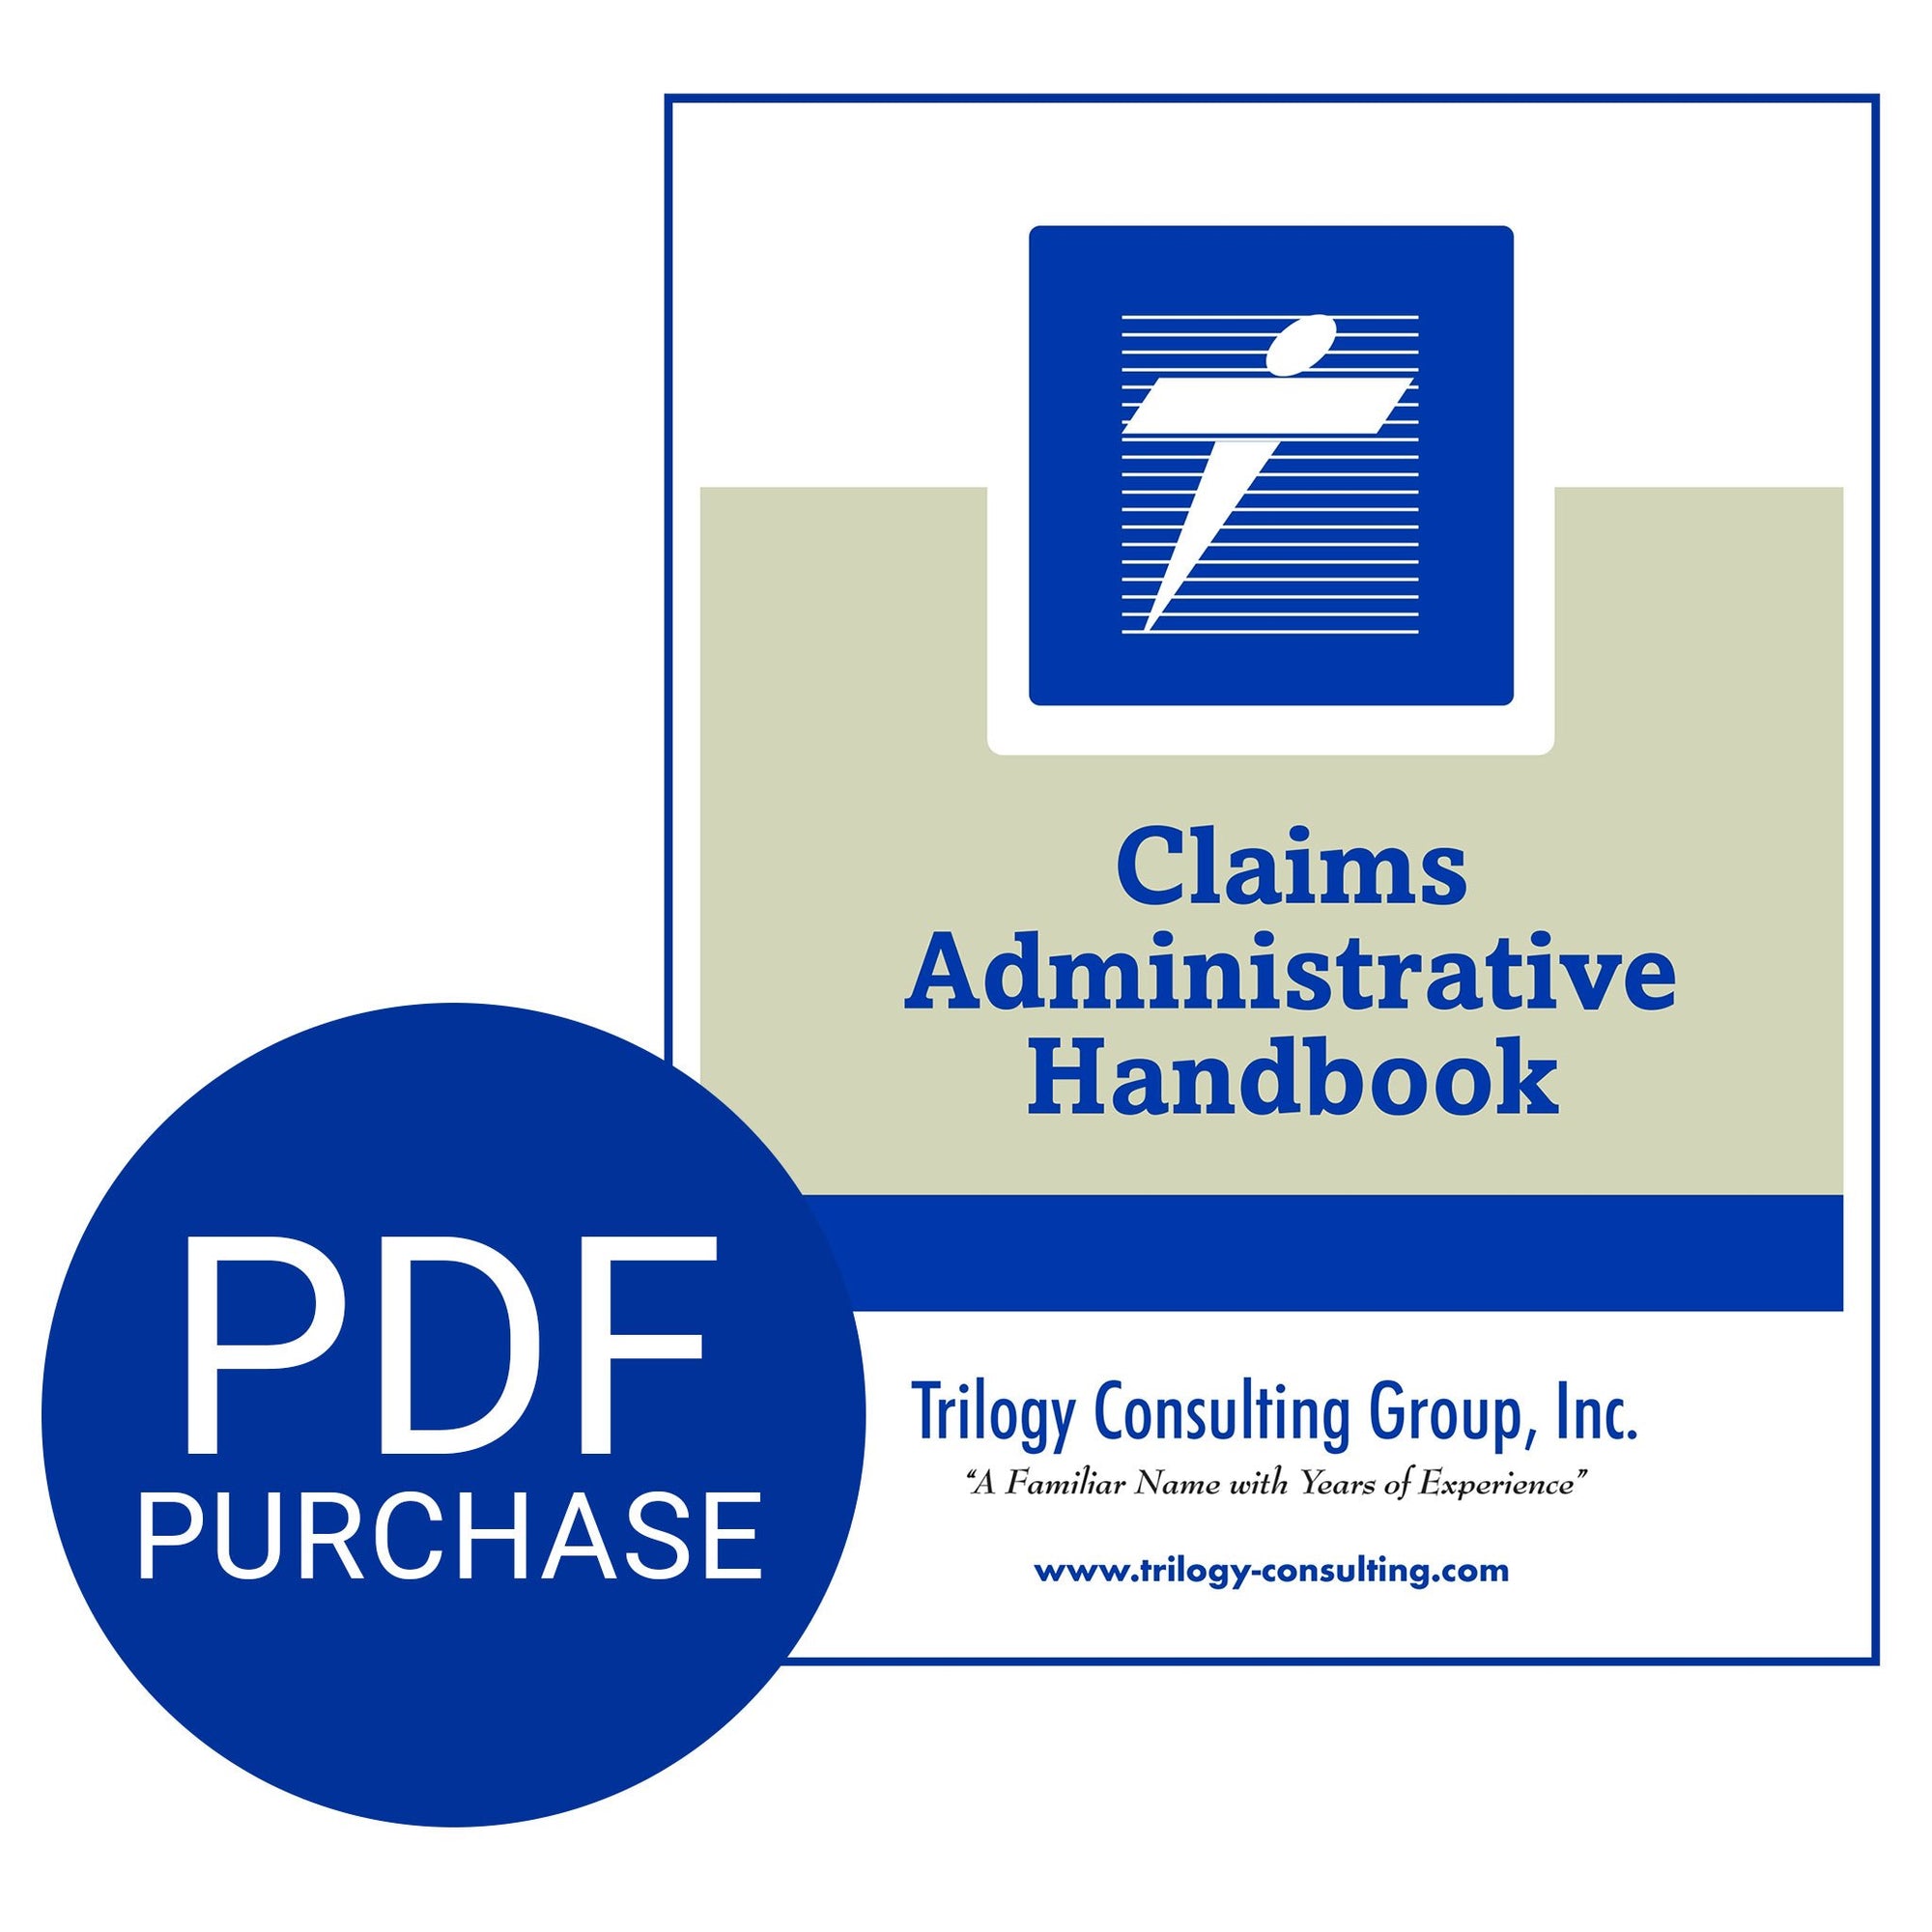 Trilogy Claims Administrative Handbook - Downloadable PDF